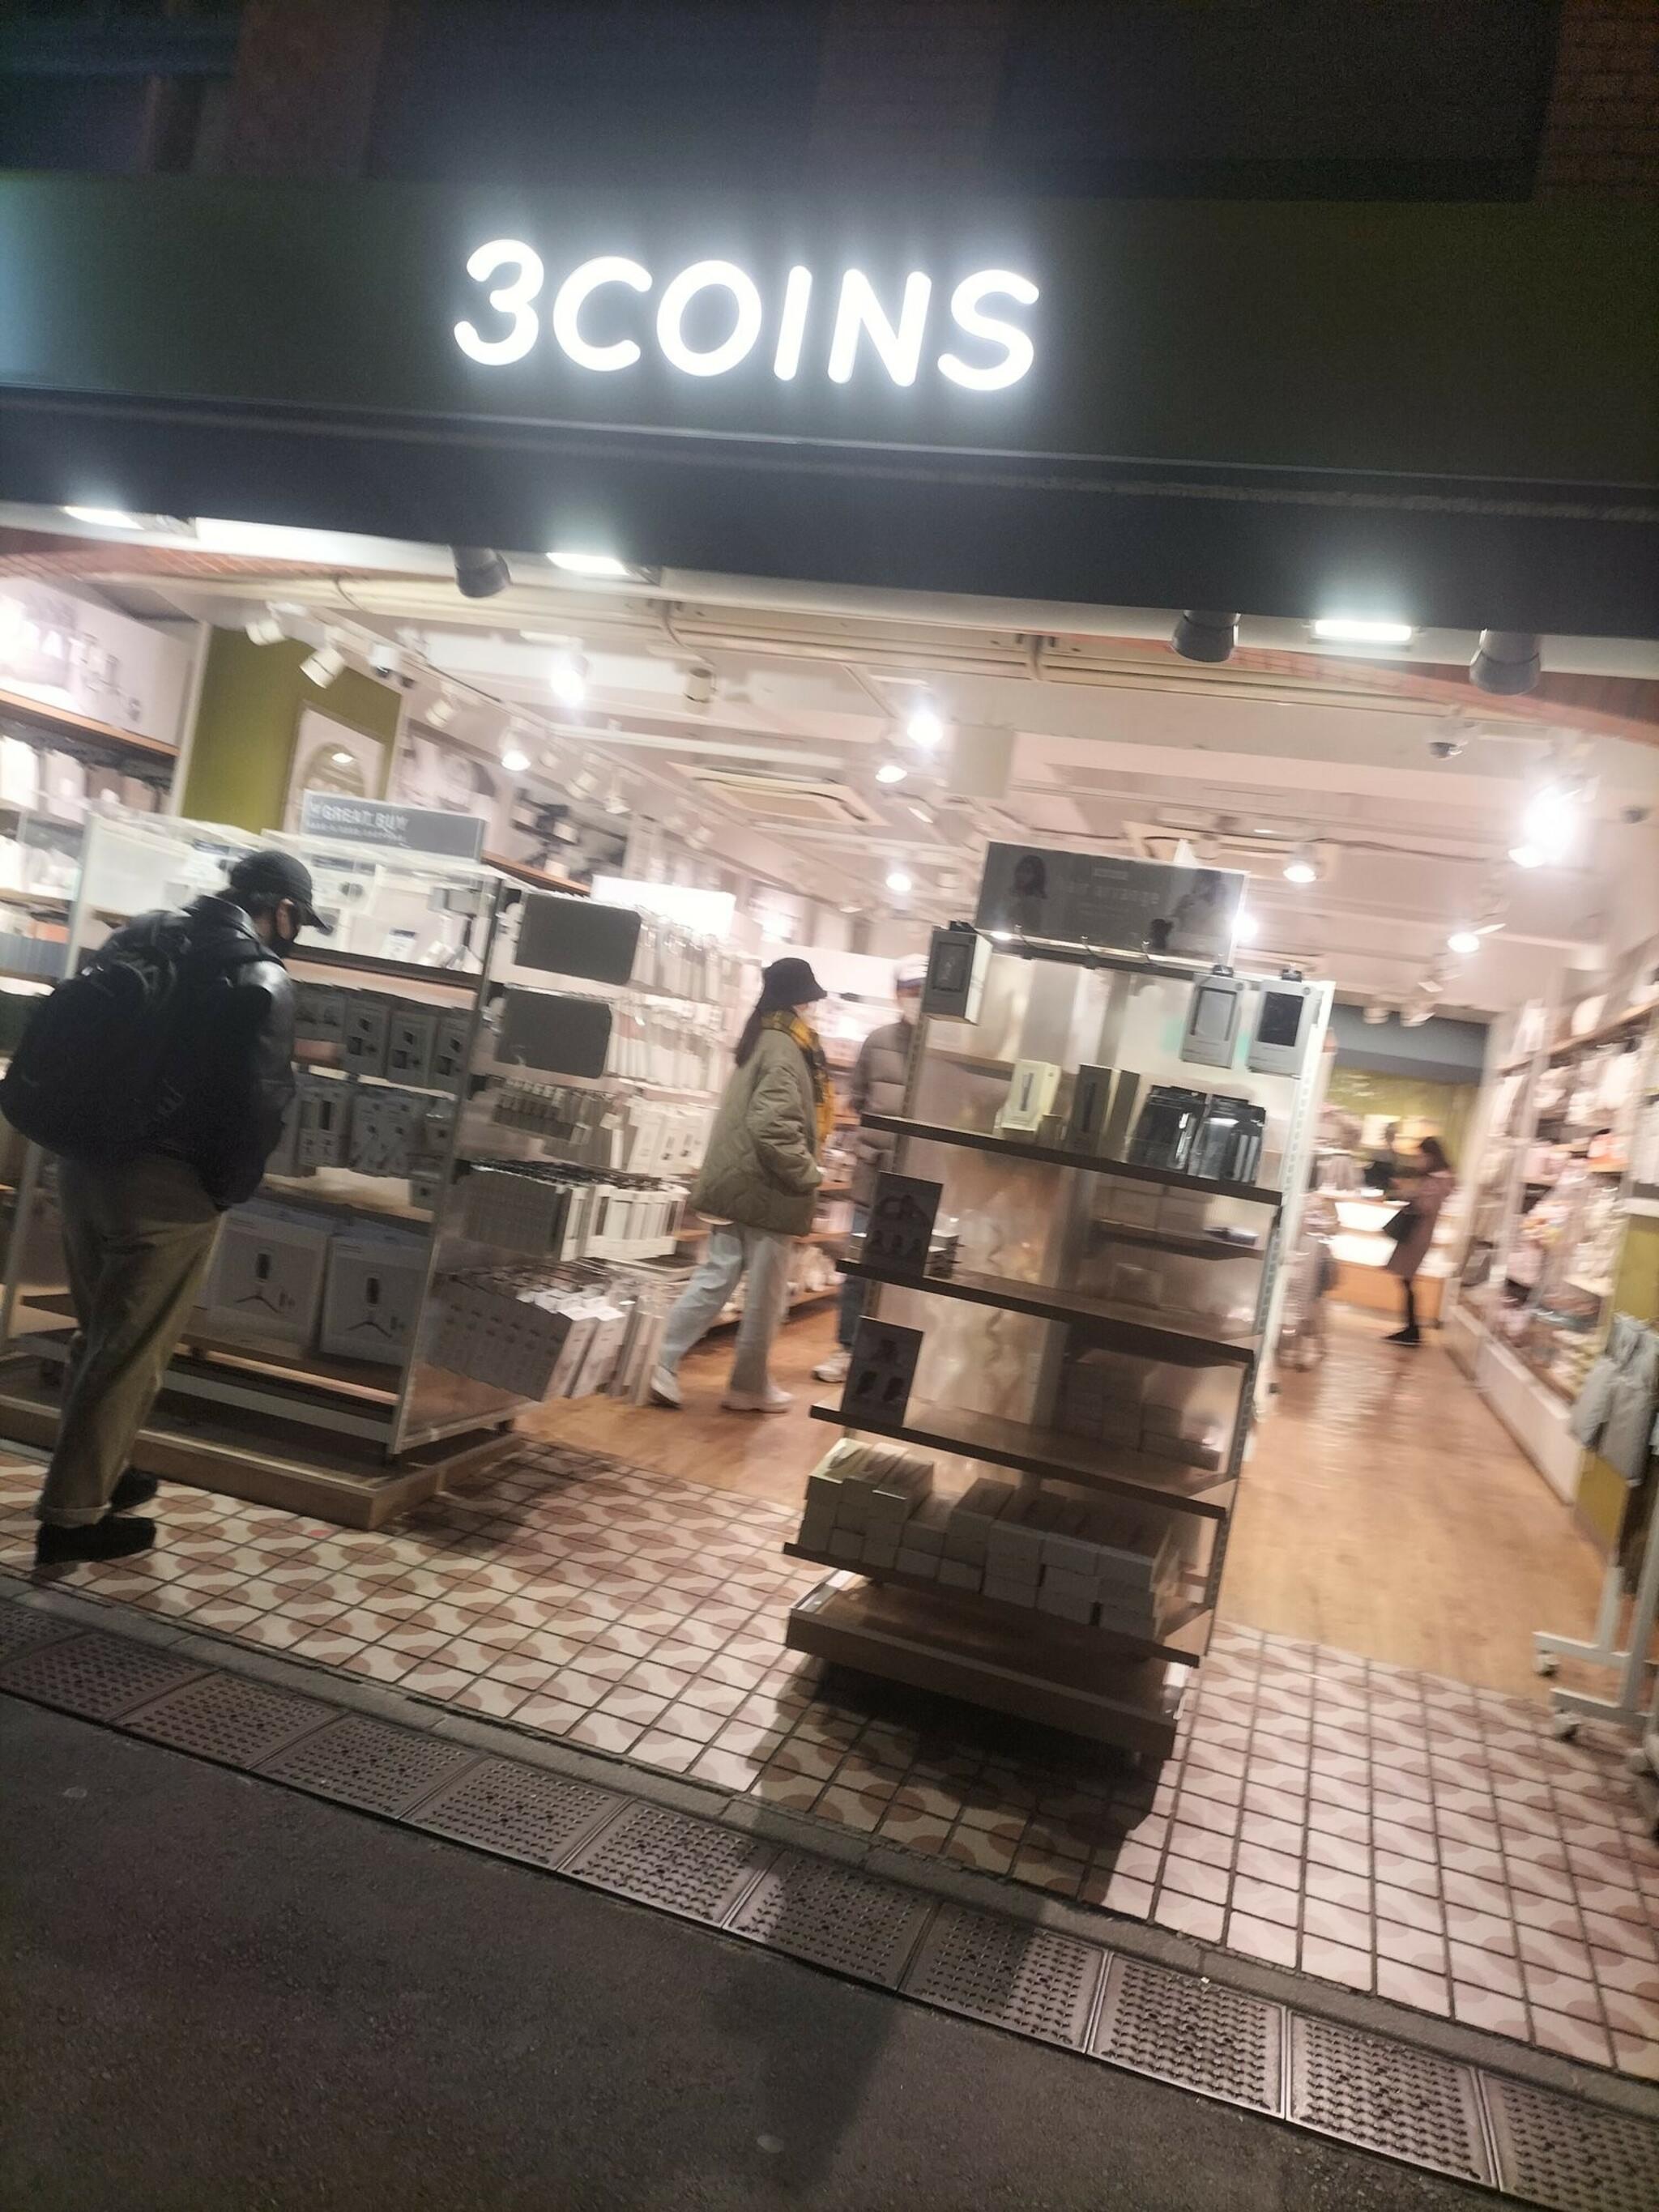 3COINS 下北沢店の代表写真3